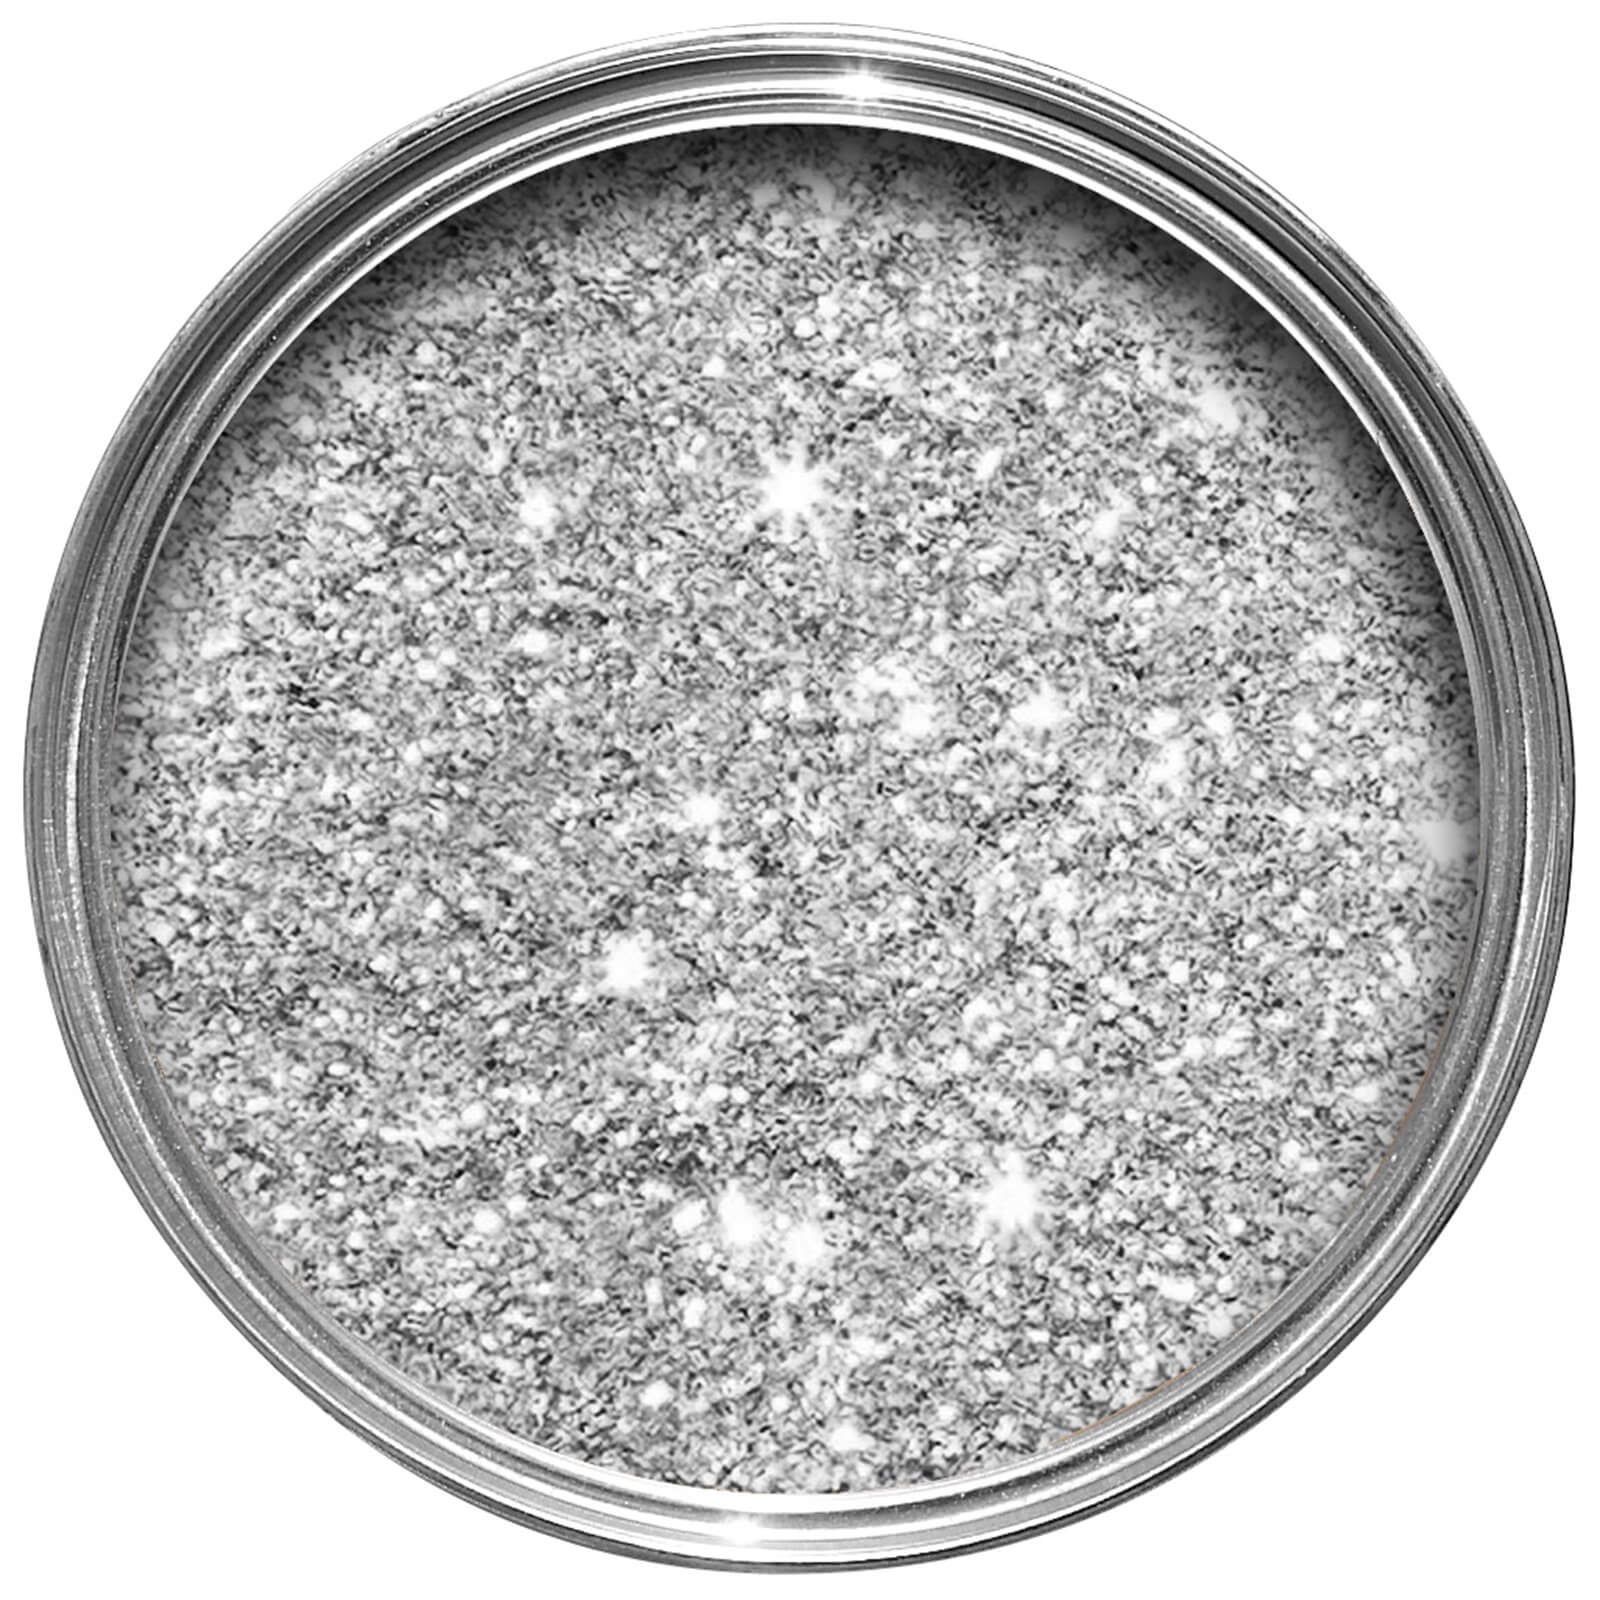 Rust-Oleum Feature Wall Glitter Silver - 1L